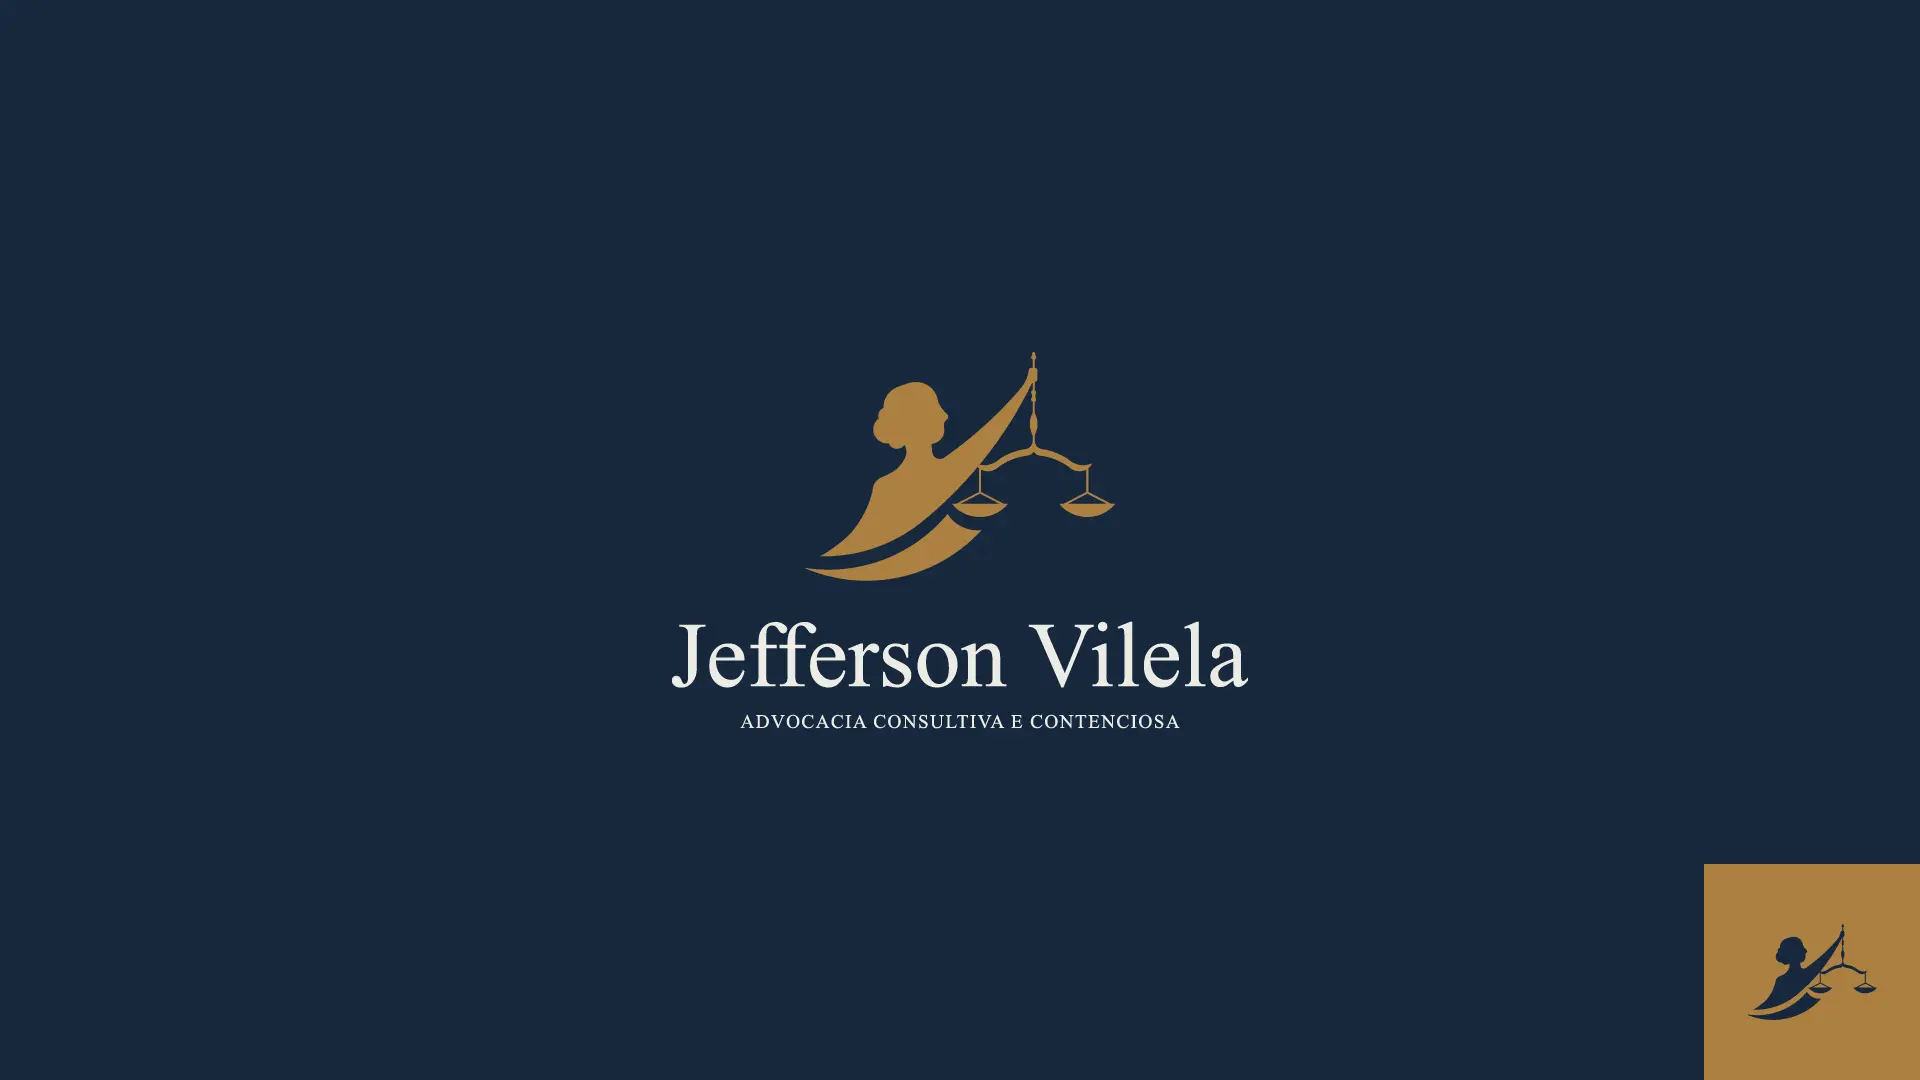 Jefferson Vilela´s main logo lockup on a dark background